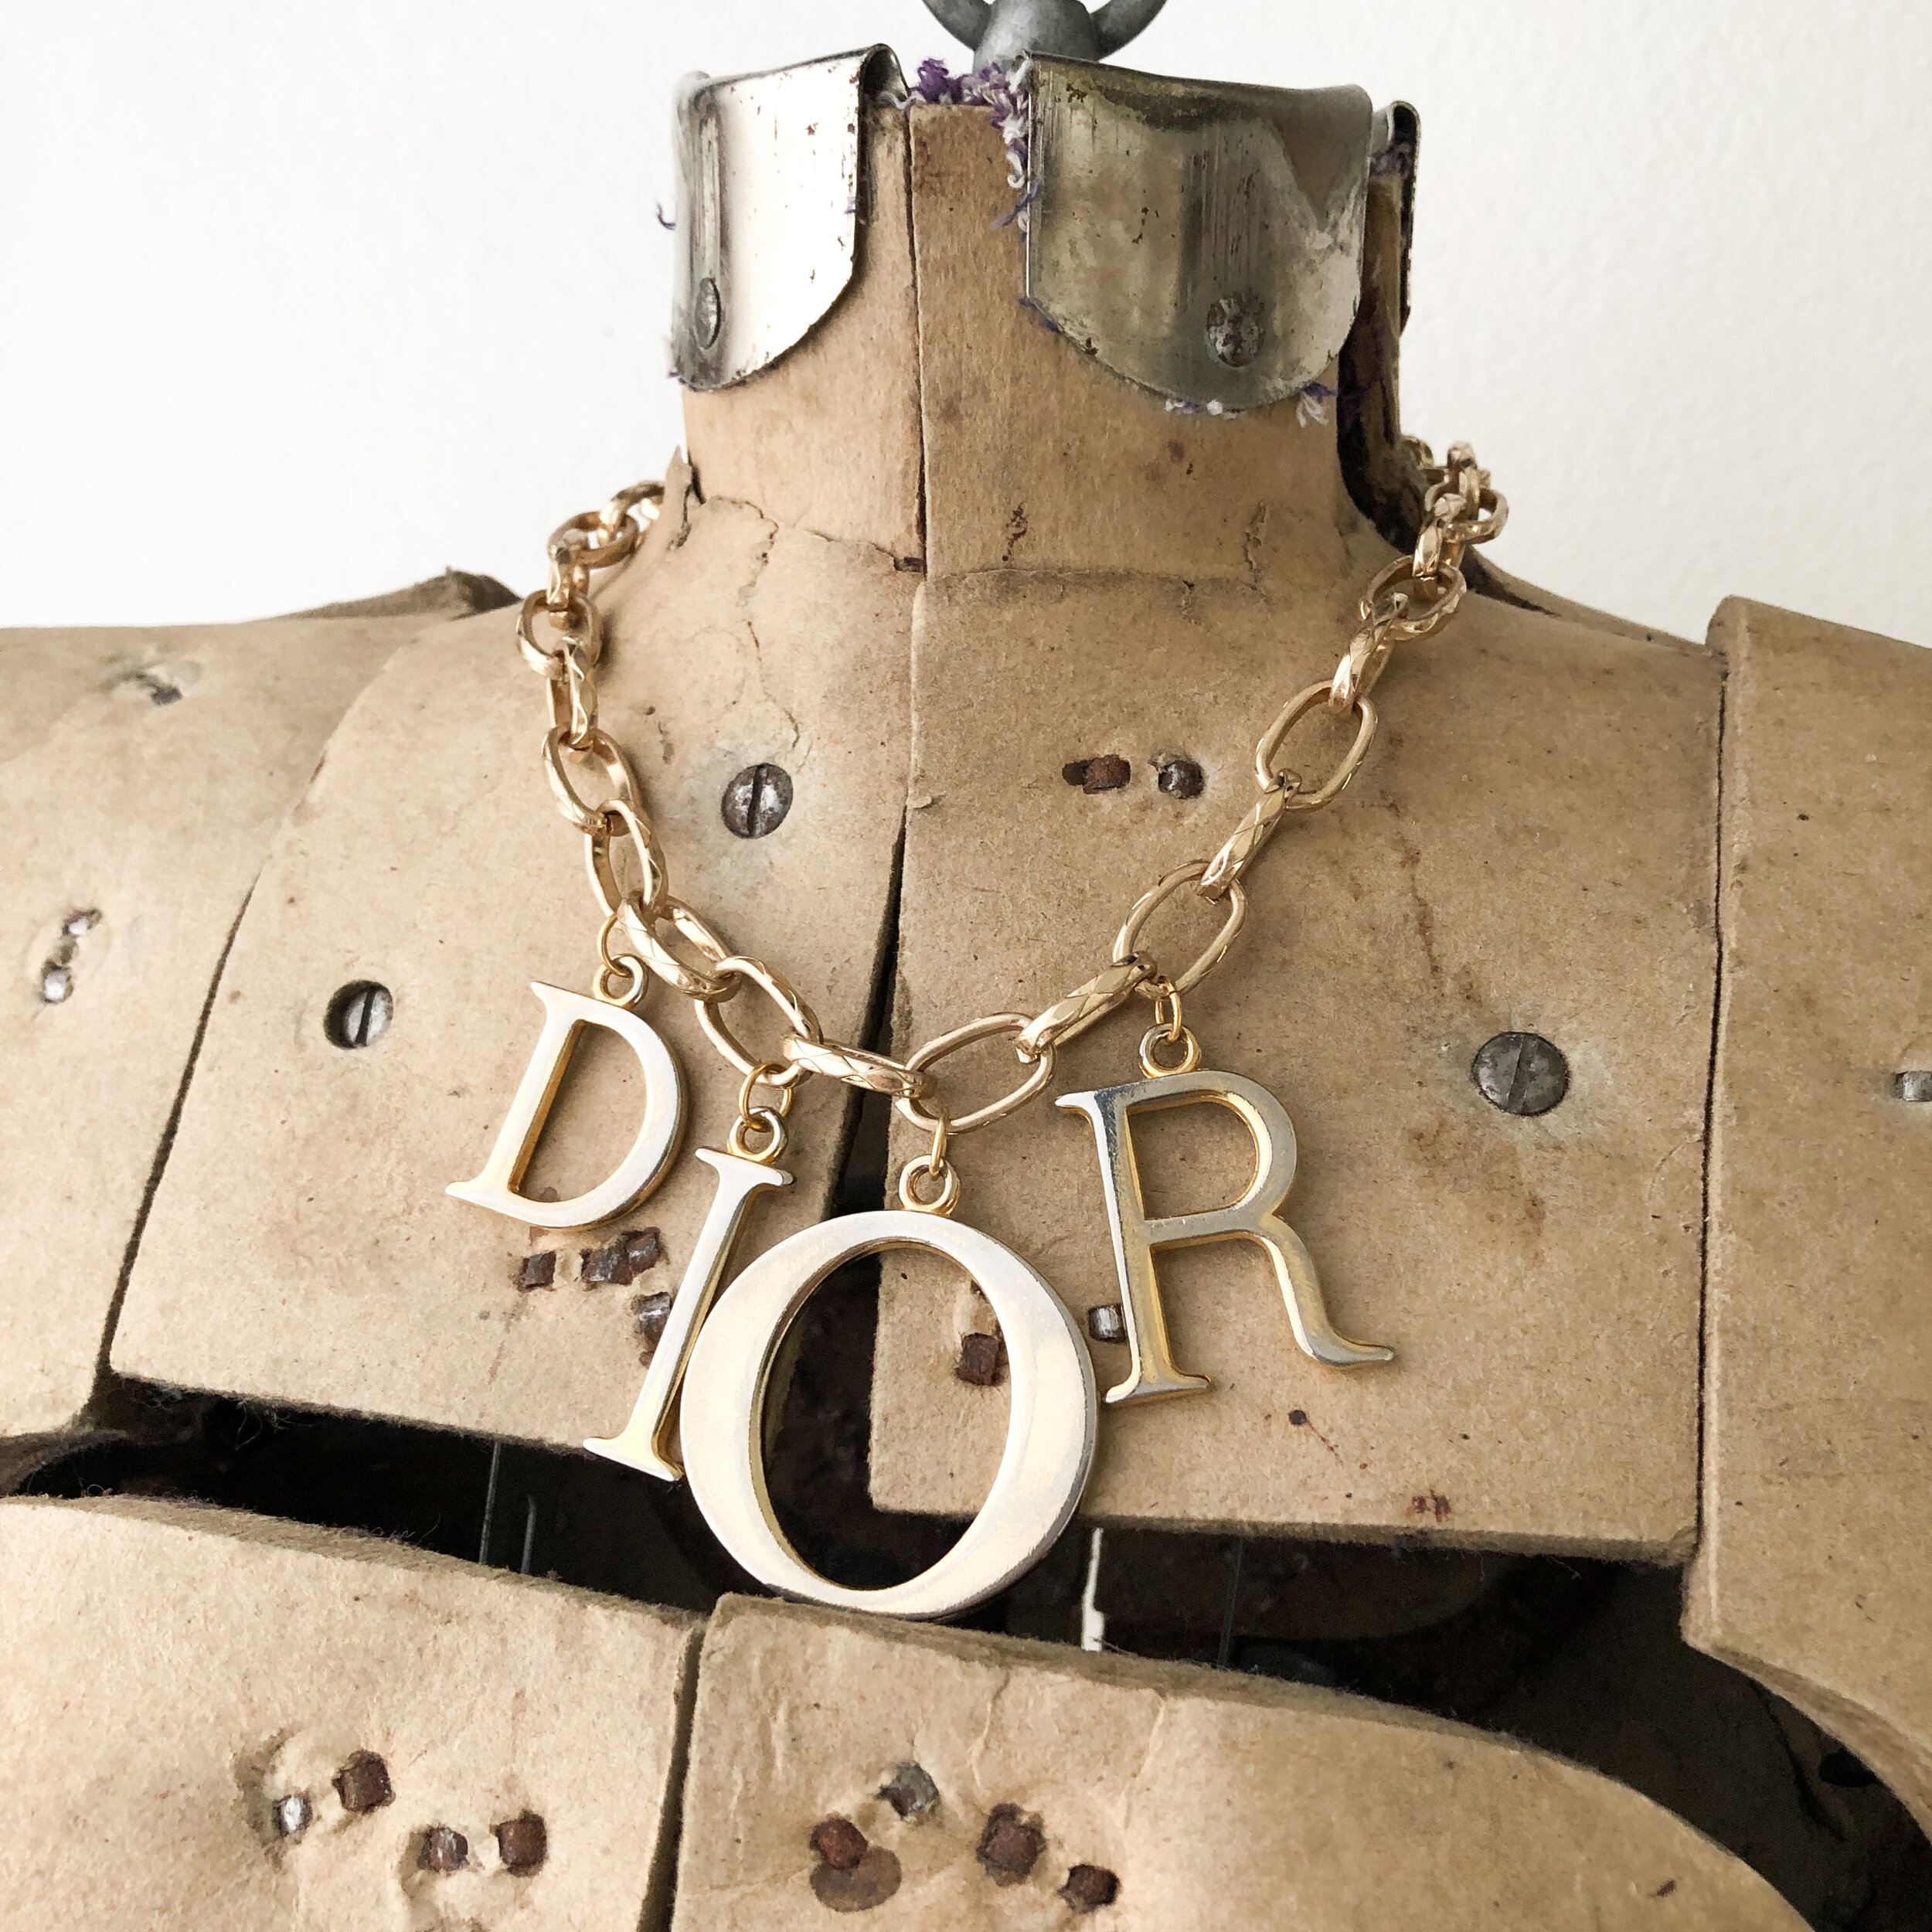 dior letter necklace